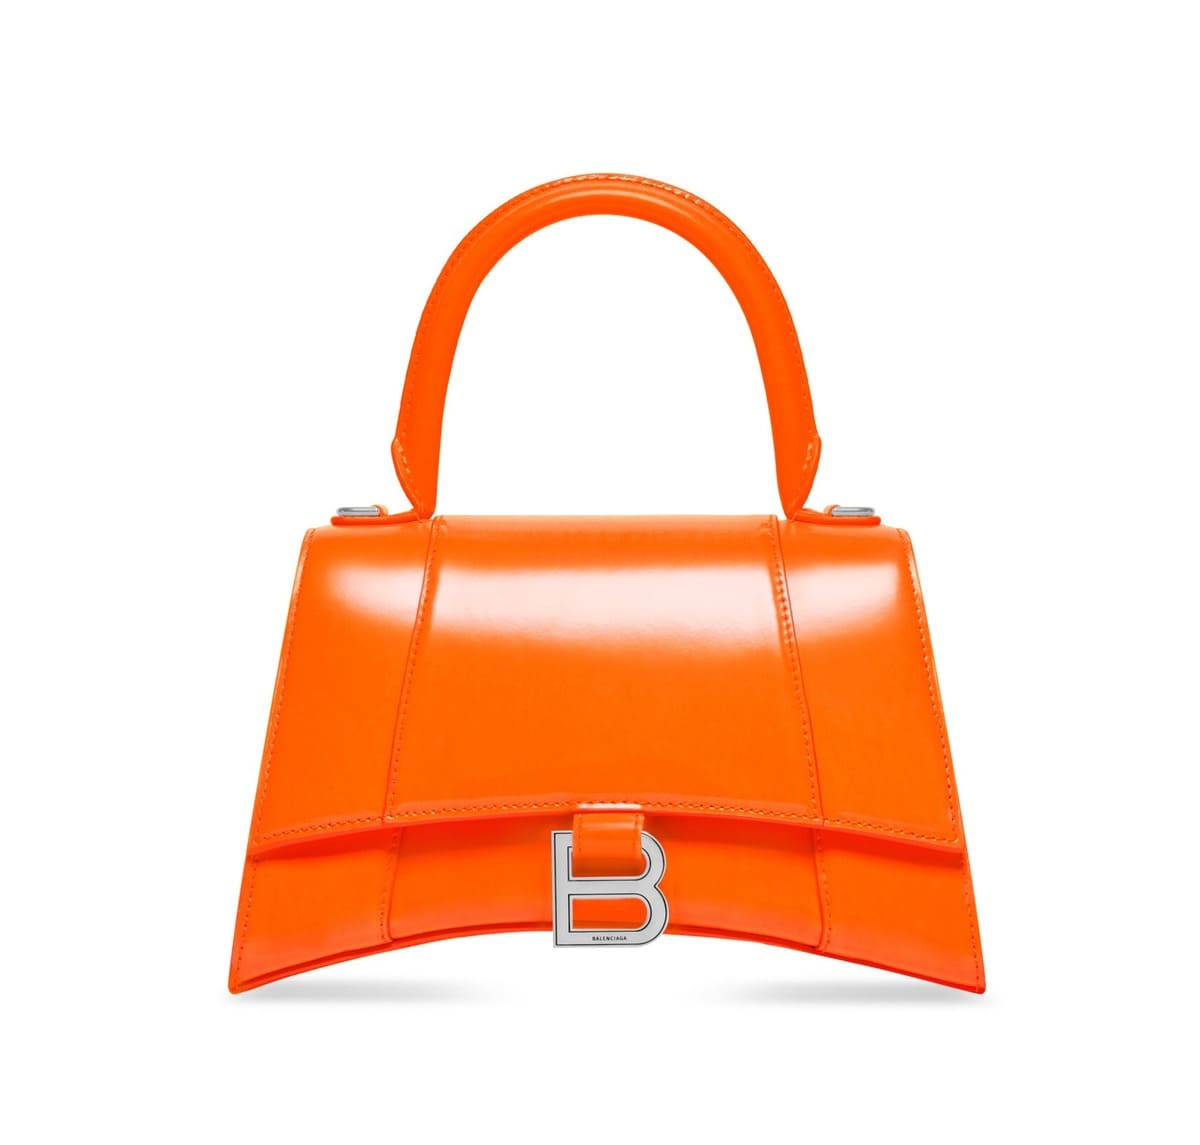 Balenciaga Hourglass Small Bag in Box Calfkin fluo orange